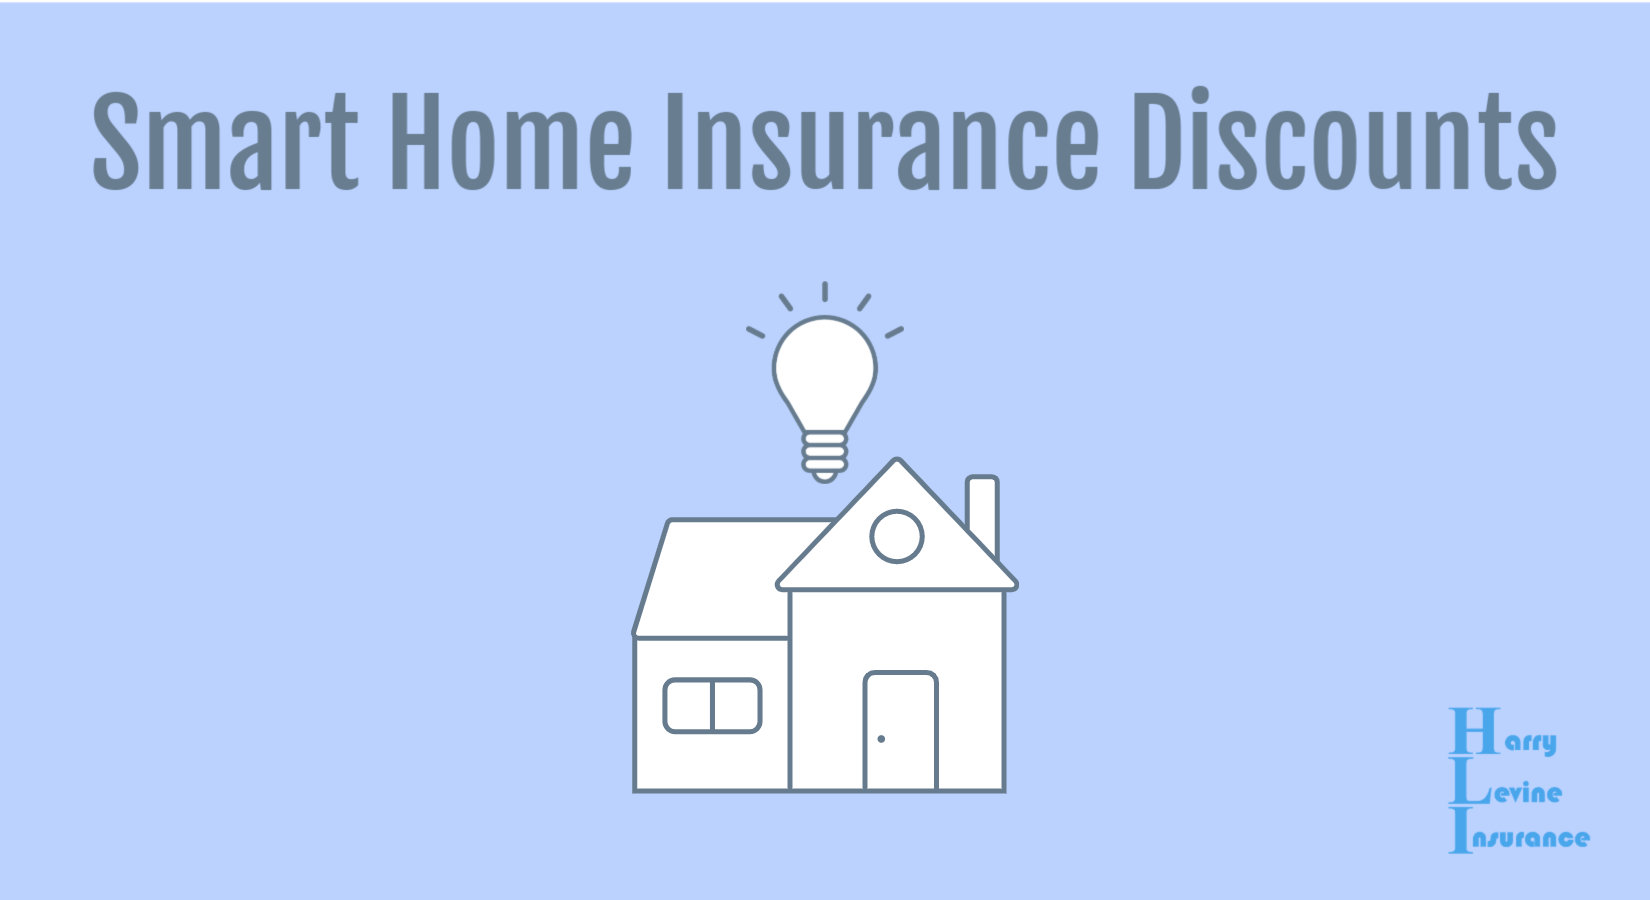 smart-home-insurance-discounts-harry-levine-insurance